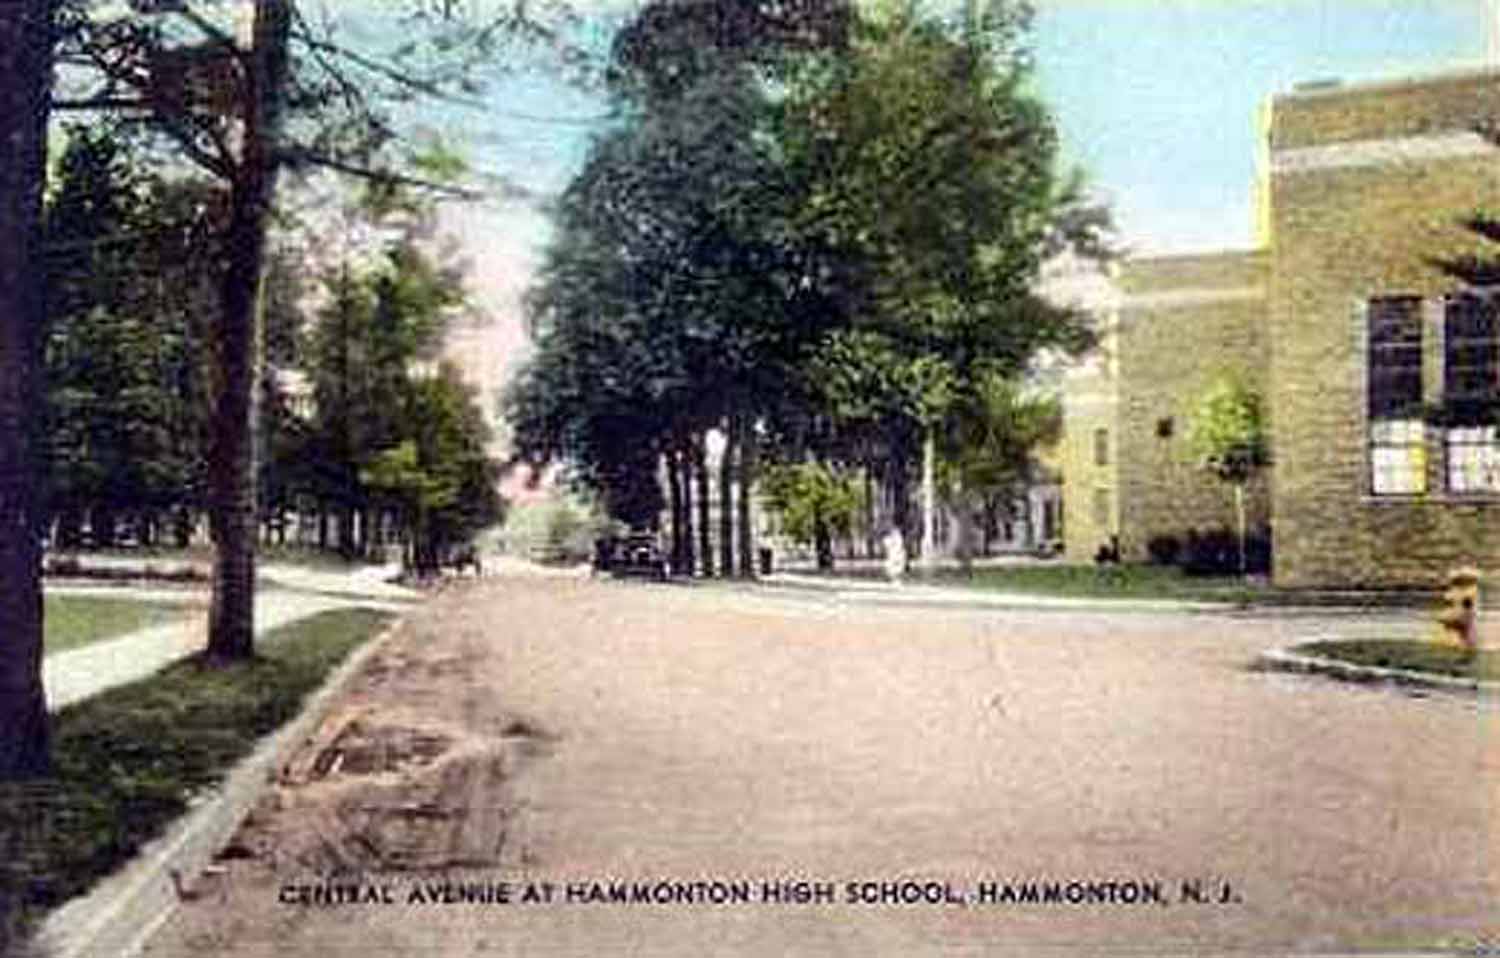 Hammonton - Central Avenue at the High School